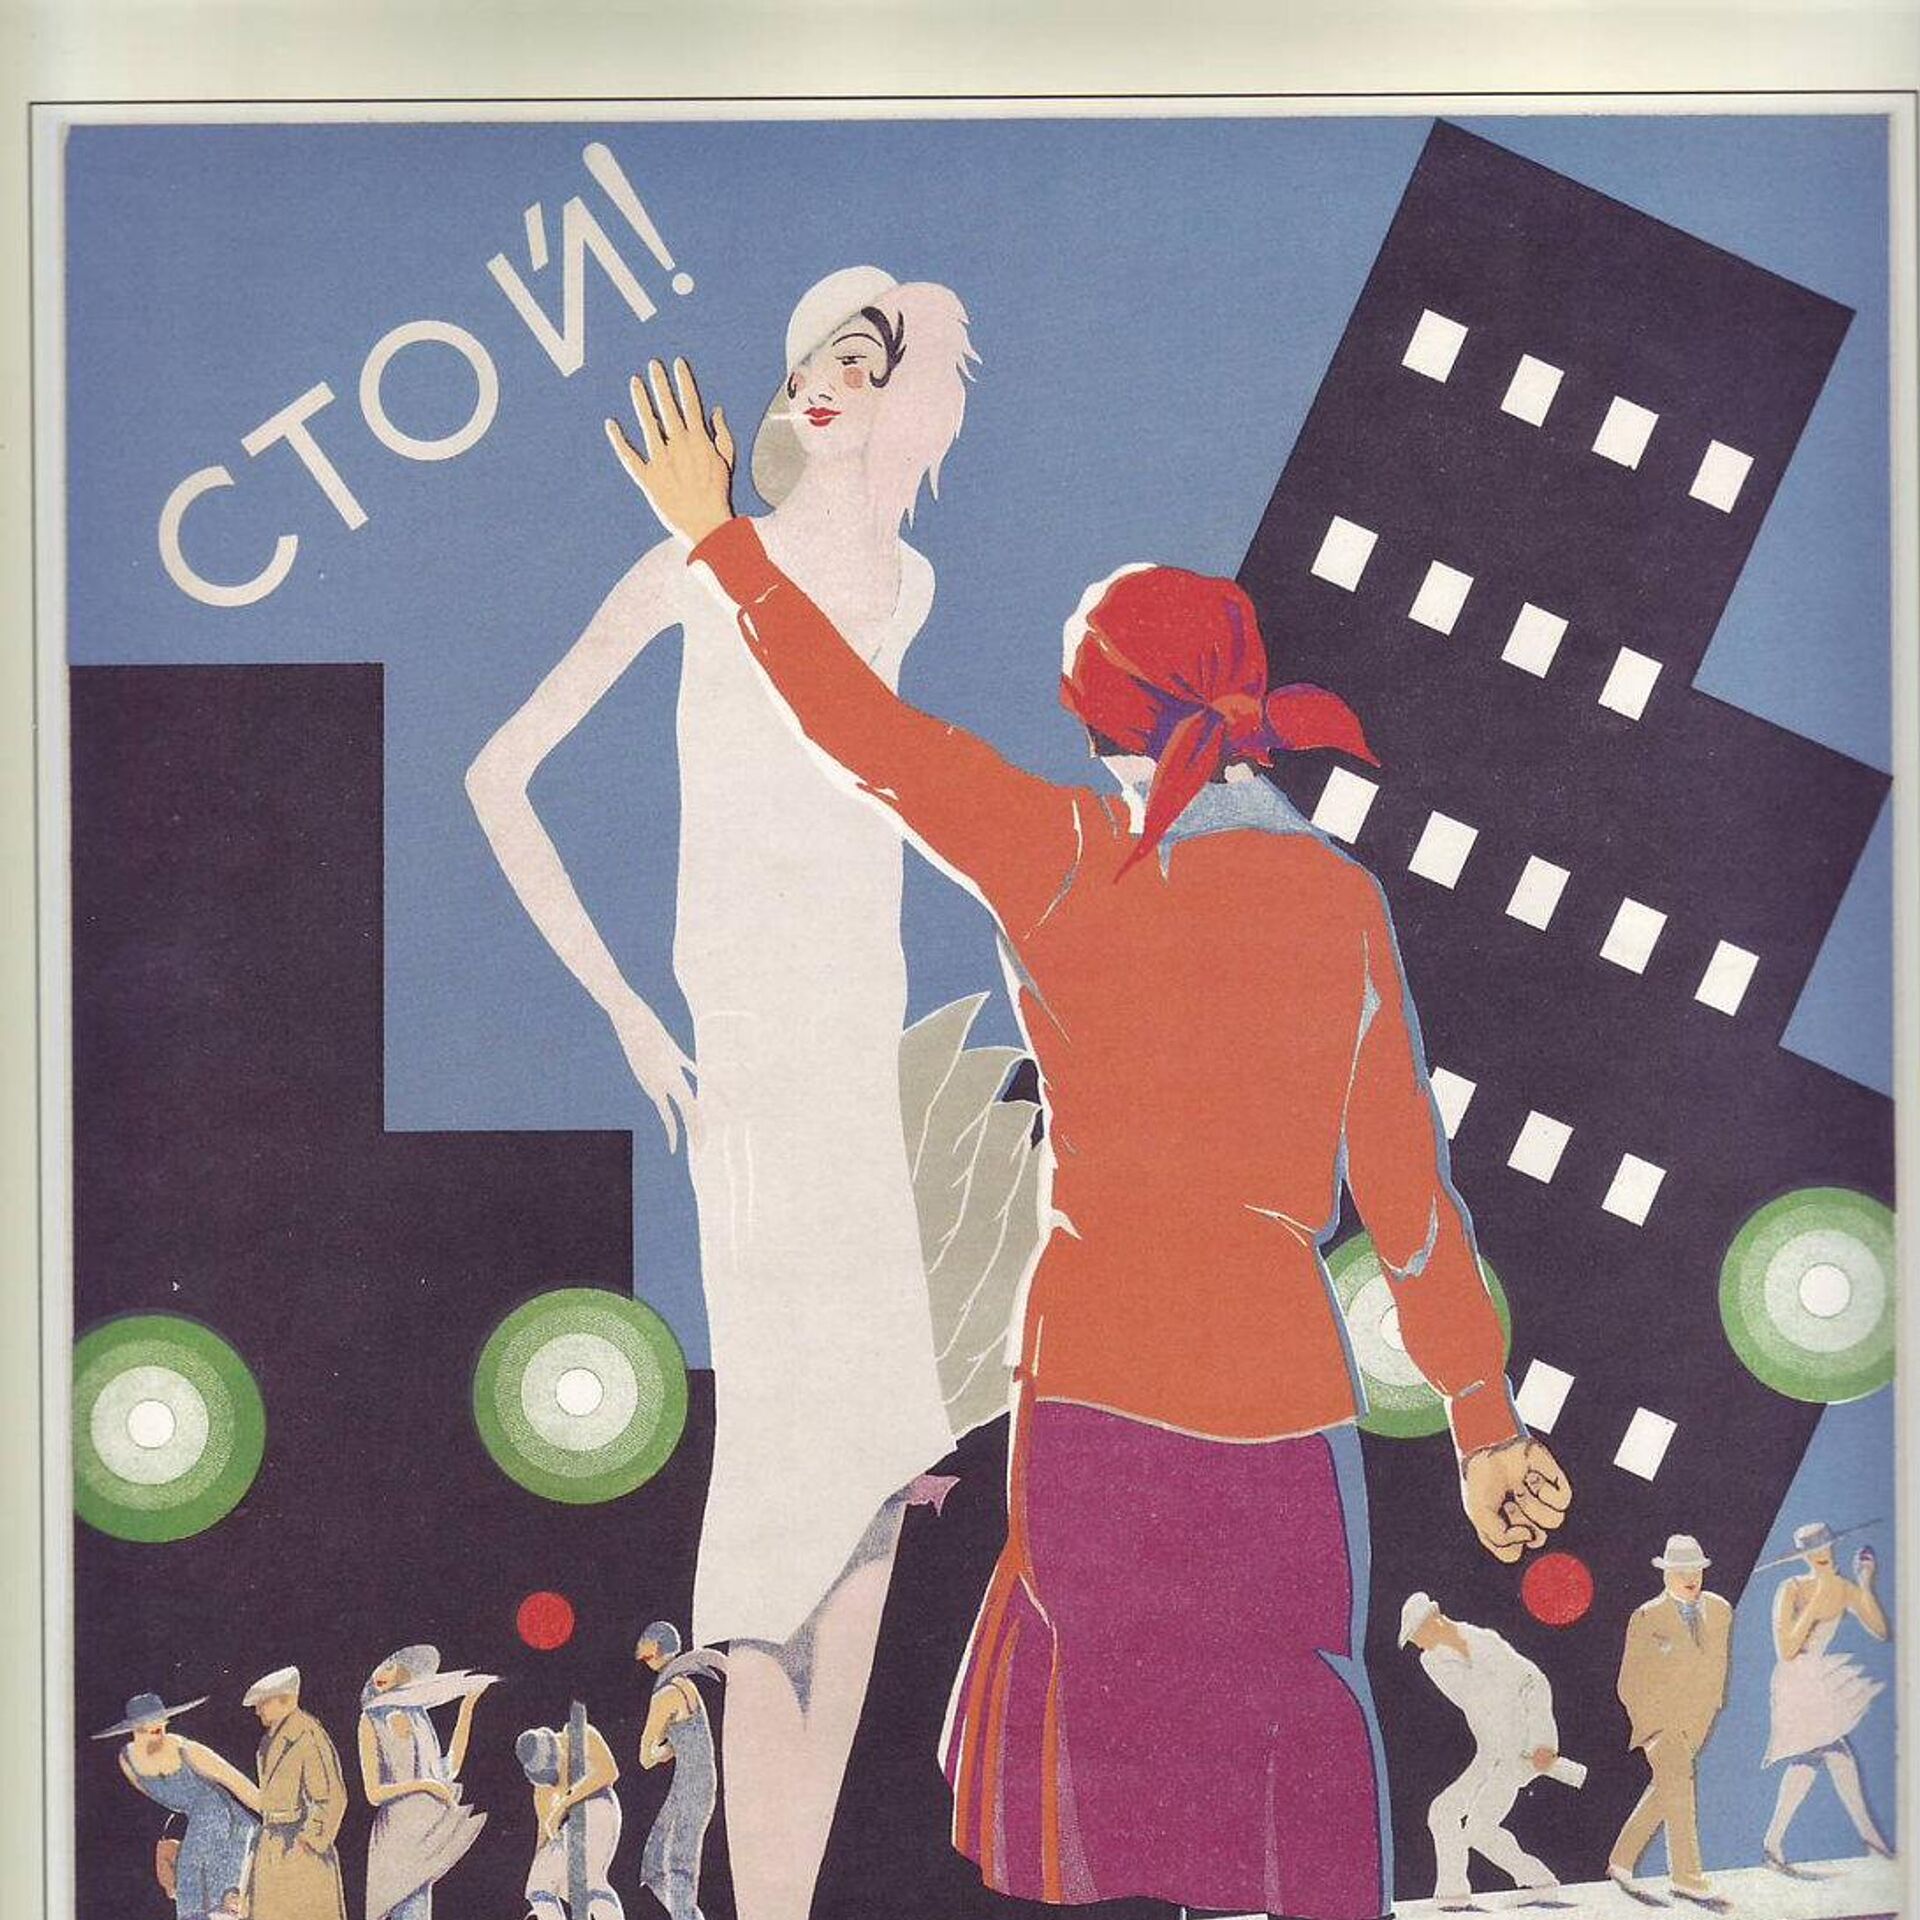 Социальная агитация. Советские плакаты. Советские плакаты современные. Социальные плакаты СССР. Современные плакаты в Советском стиле.